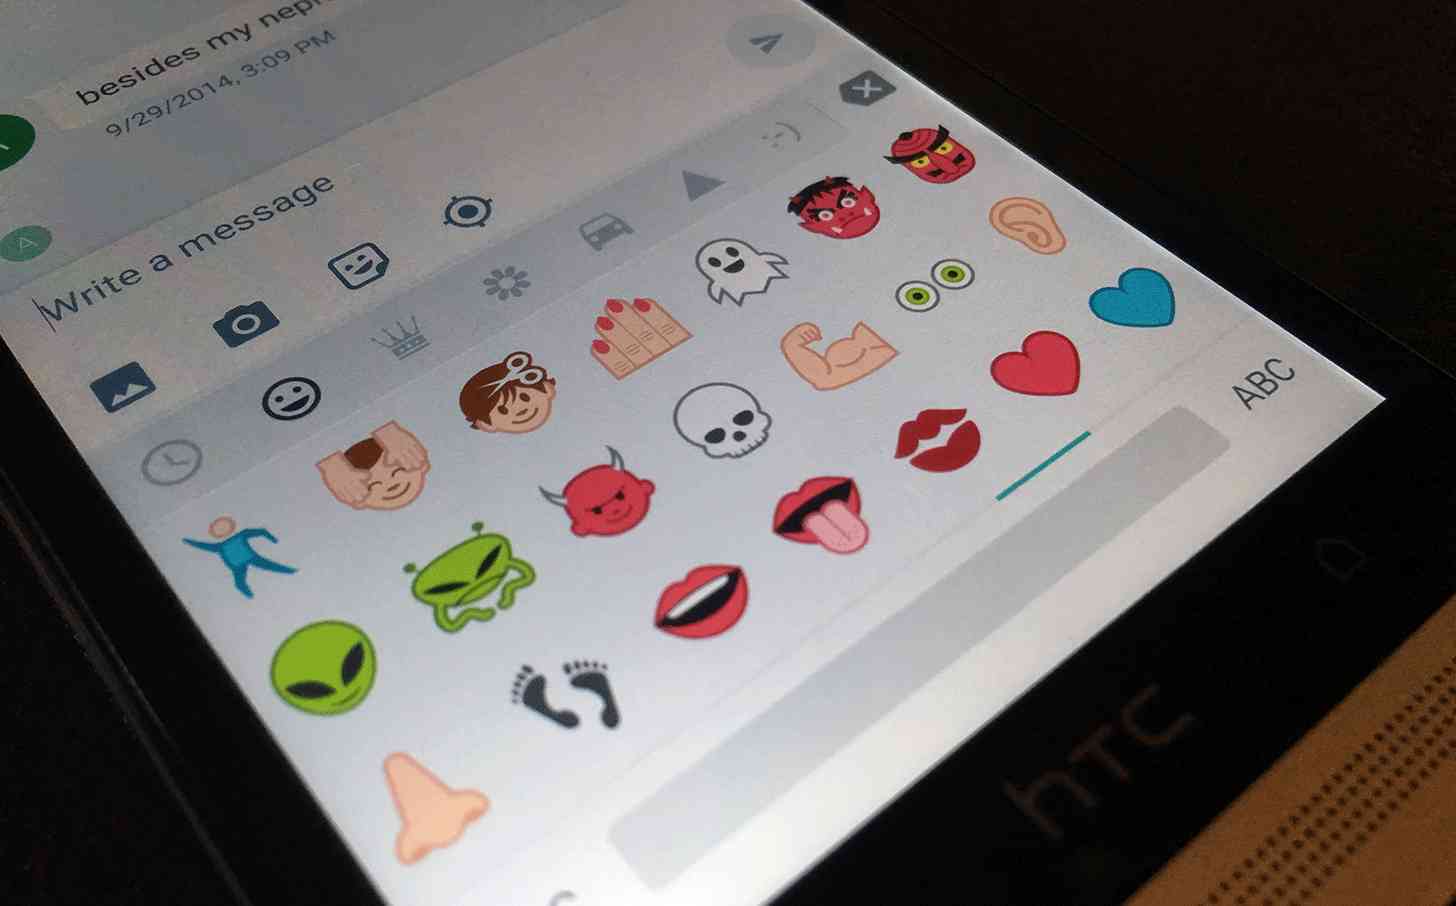 Android emoji large